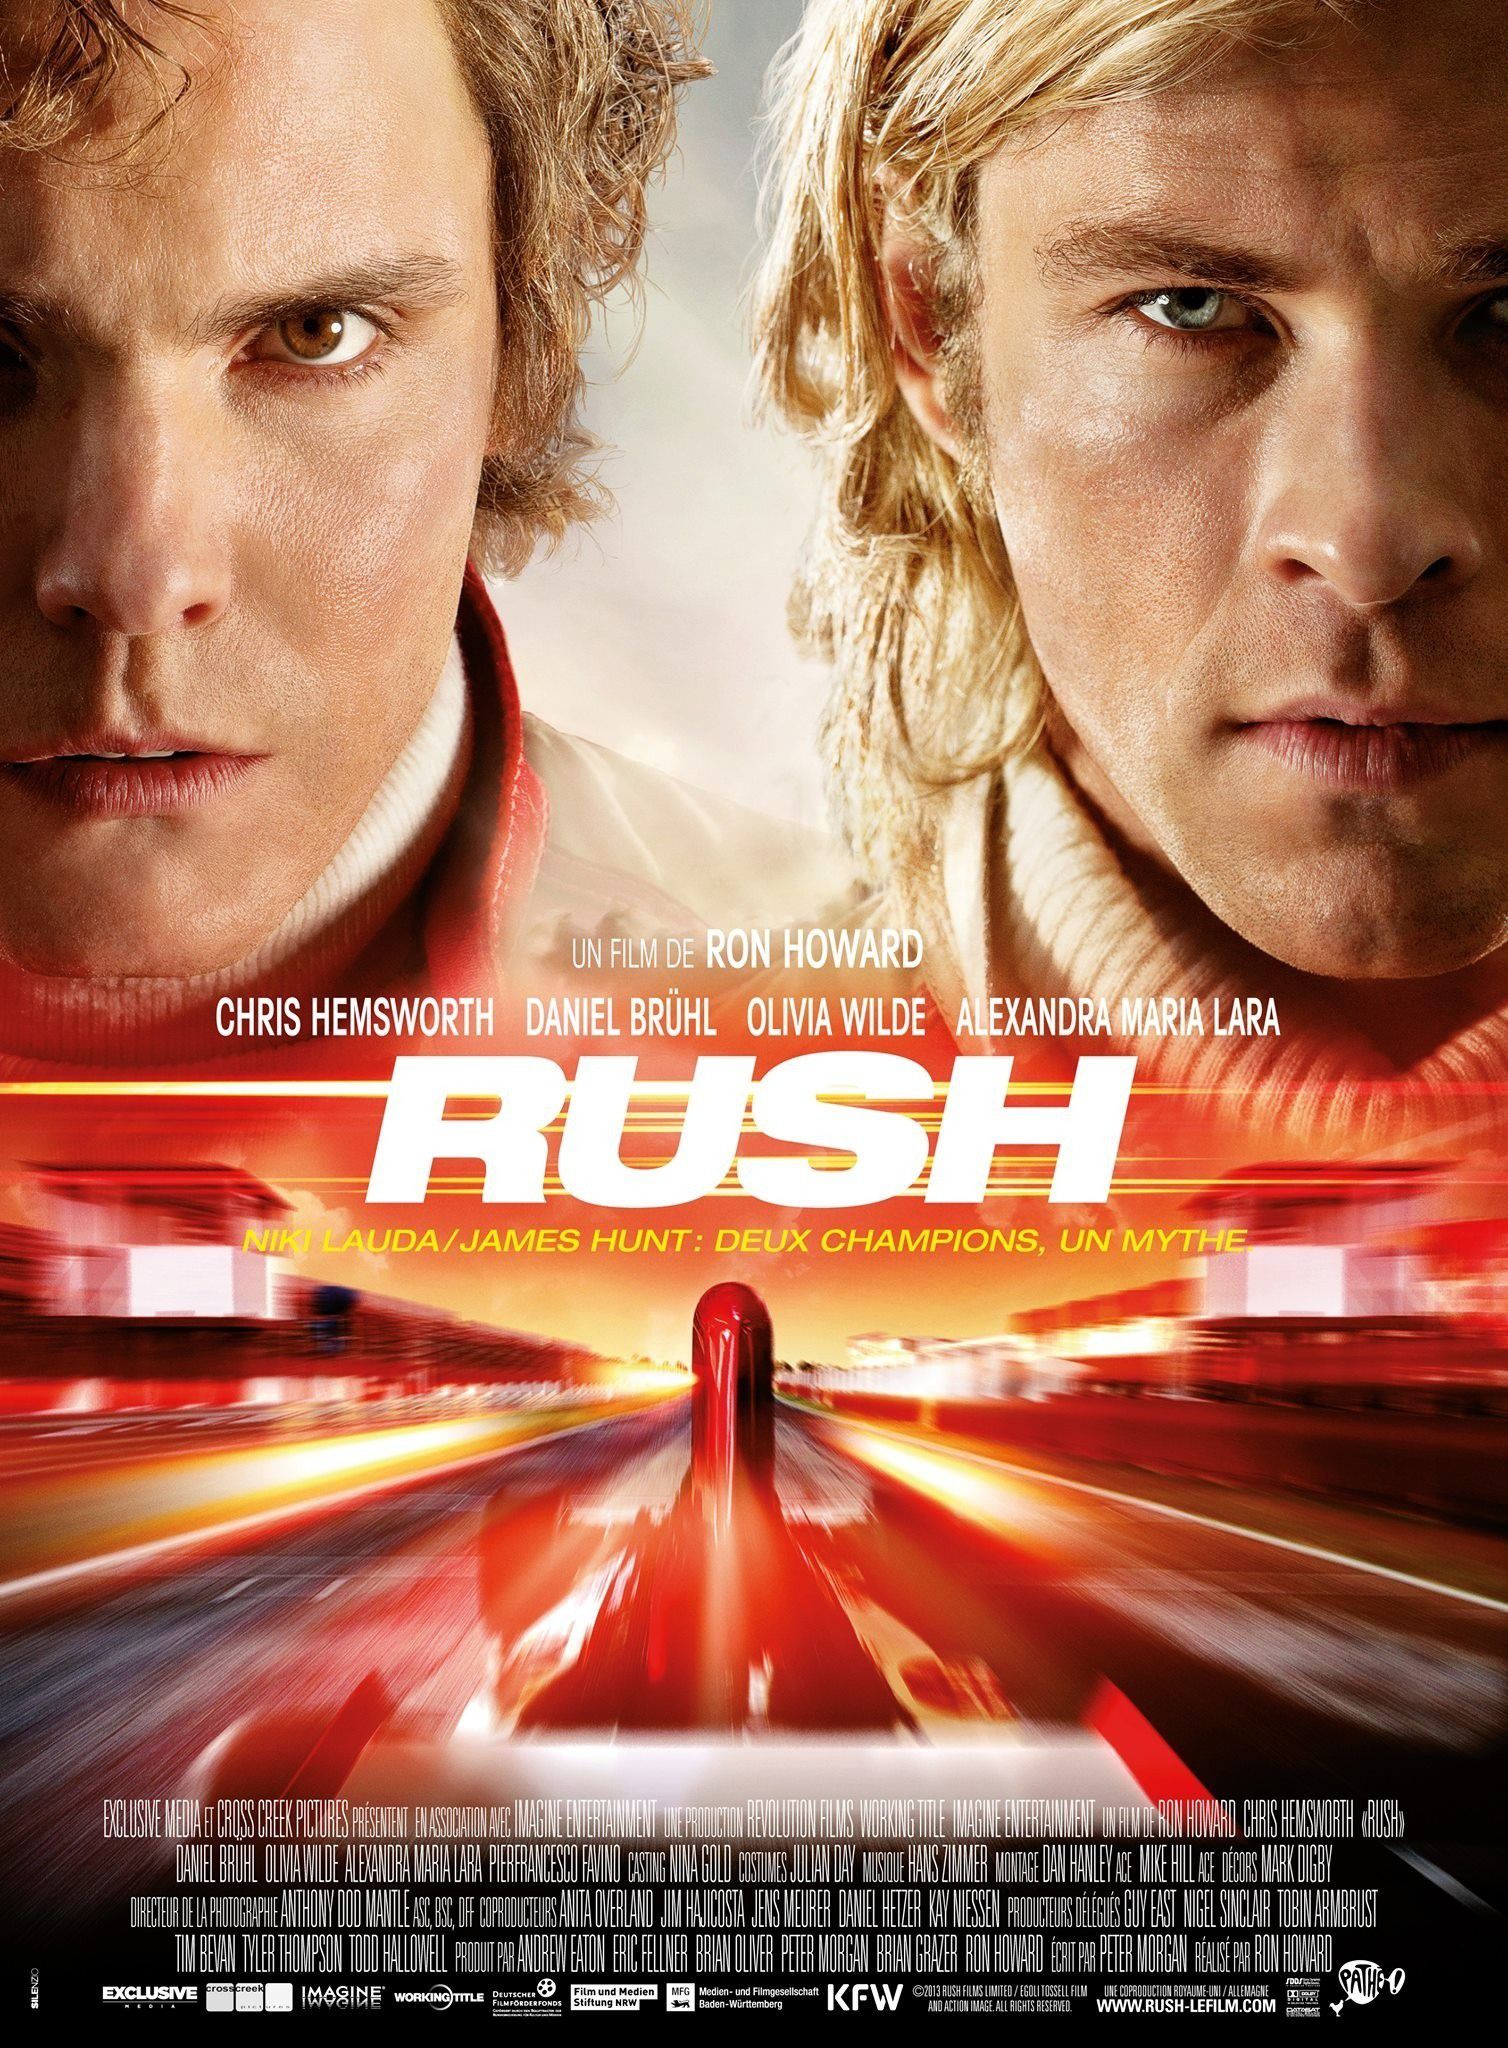 Rush - Film (2013) streaming VF gratuit complet